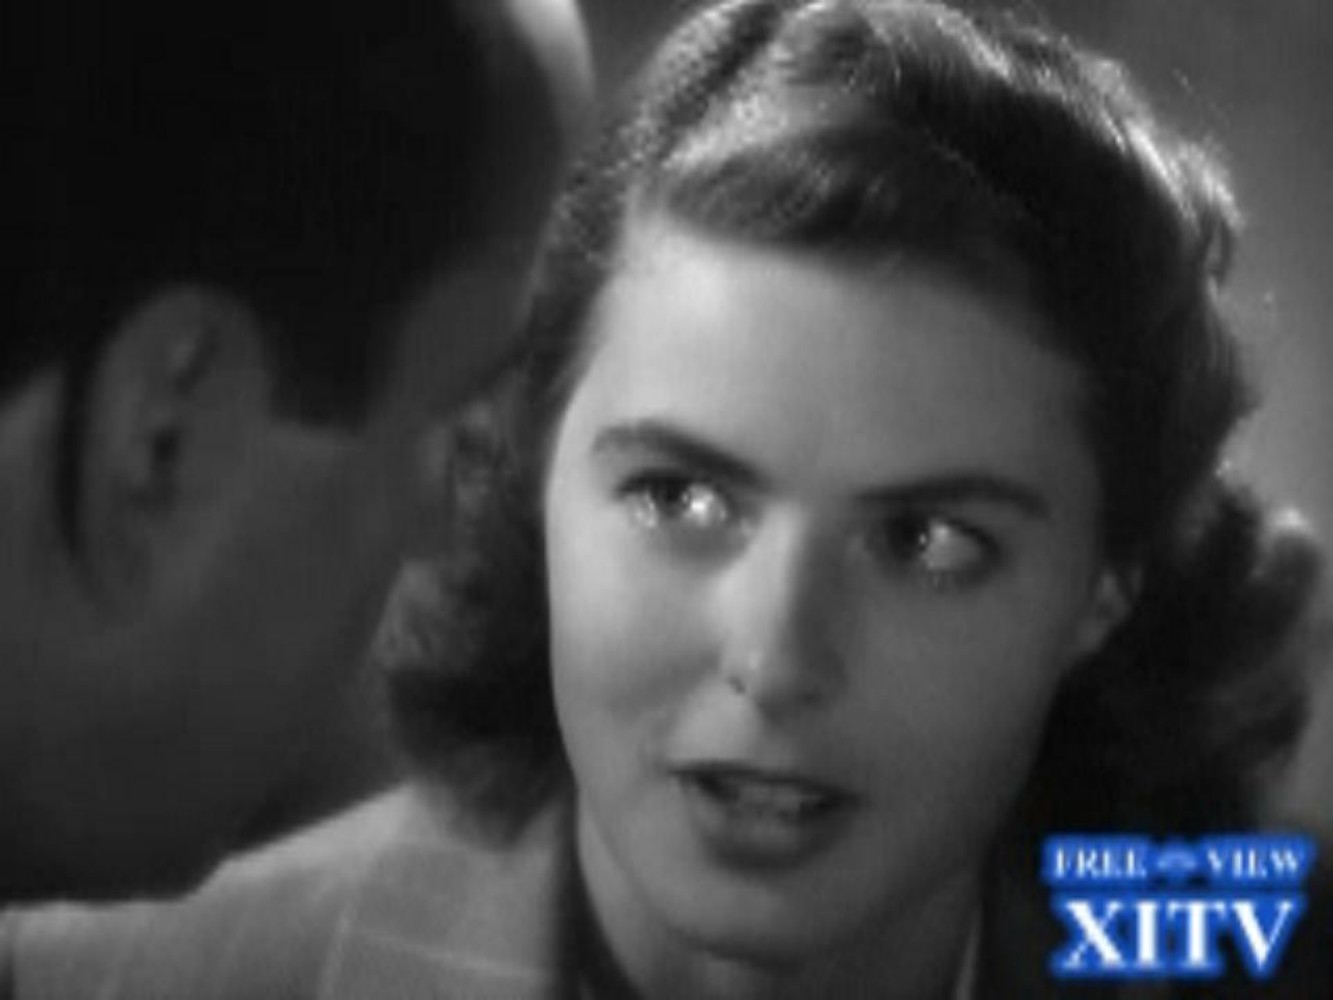 Watch Now! XITV FREE <> VIEW™ Casablanca! Starring Ingrid Bergman and Humphrey Bogart! XITV Is Must See TV! 